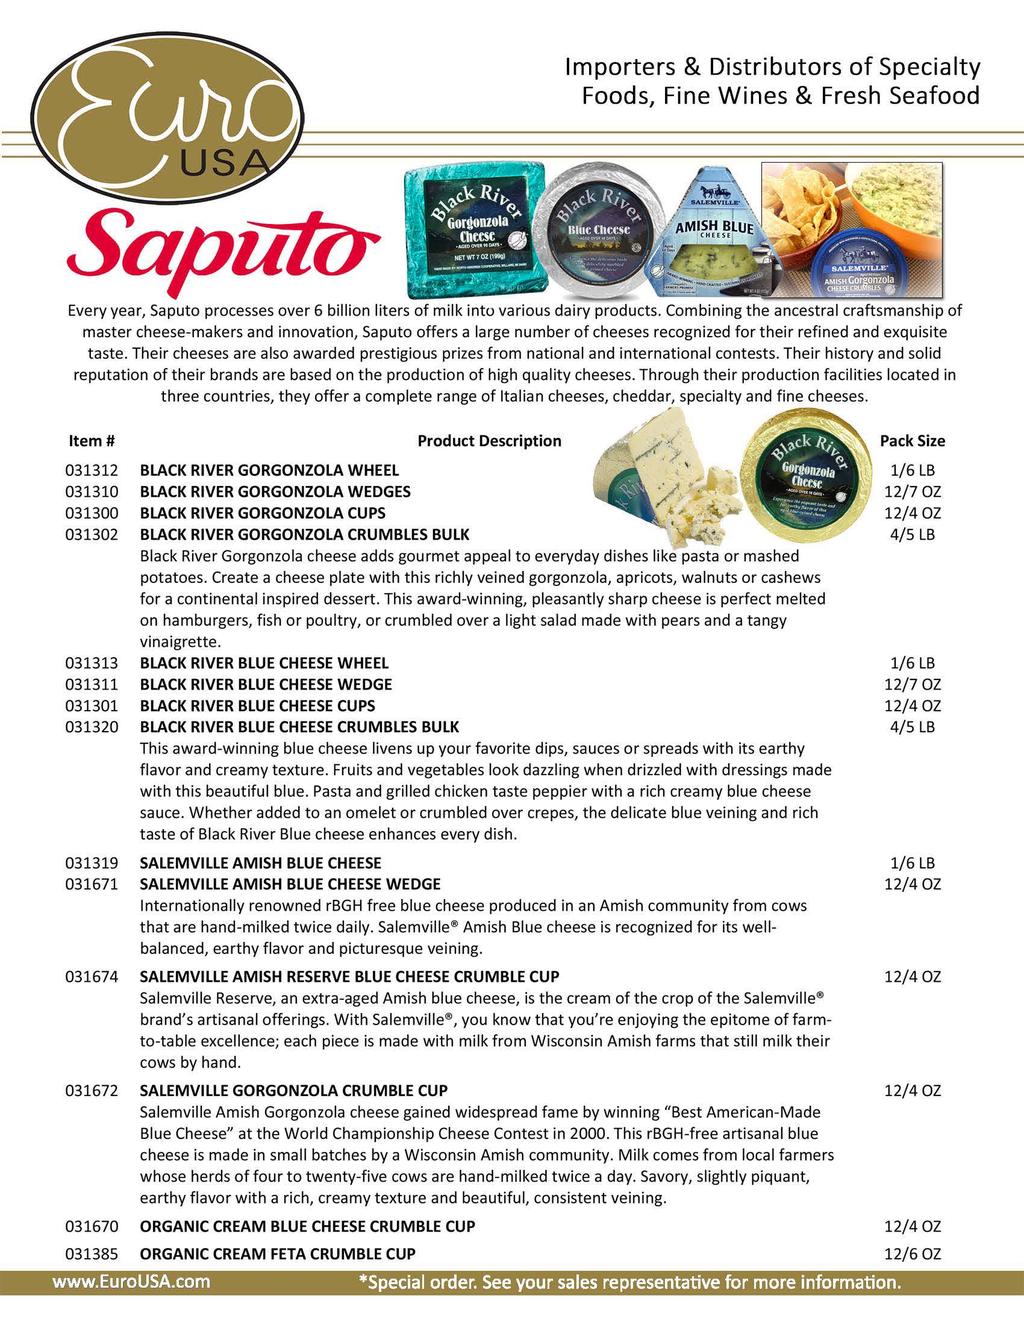 Saputu - Every year, Saputo processes over 6 billion liters of milk into various dairy products.